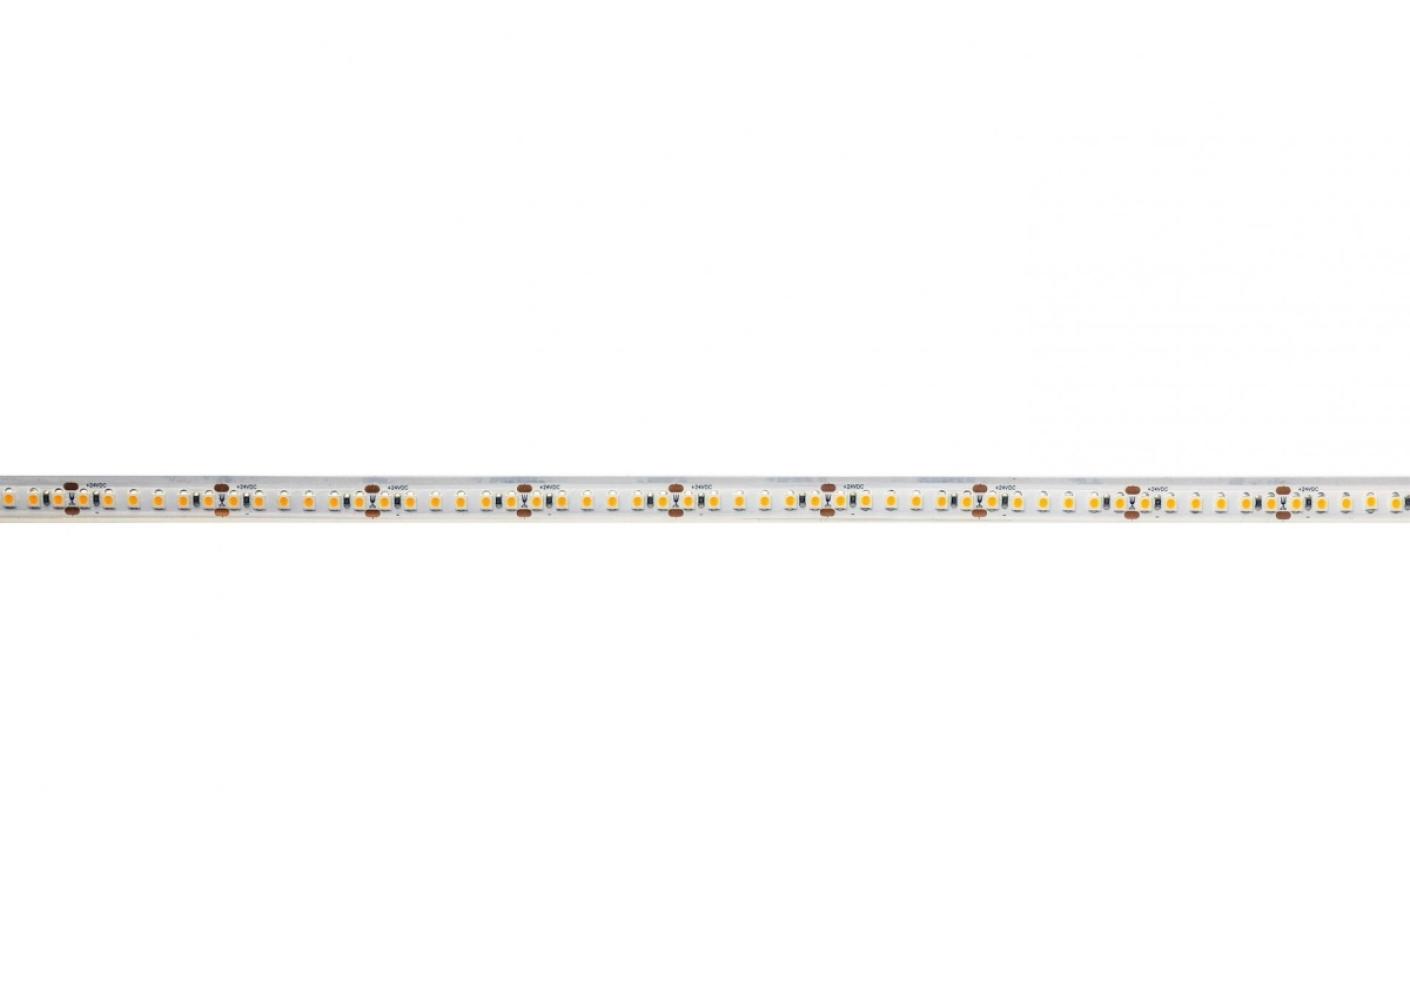 Deko Light 3528 180 24V 3000K 5m Silikon LED Stripe weiß IP67 2700lm >90 Ra 120° Bild 1